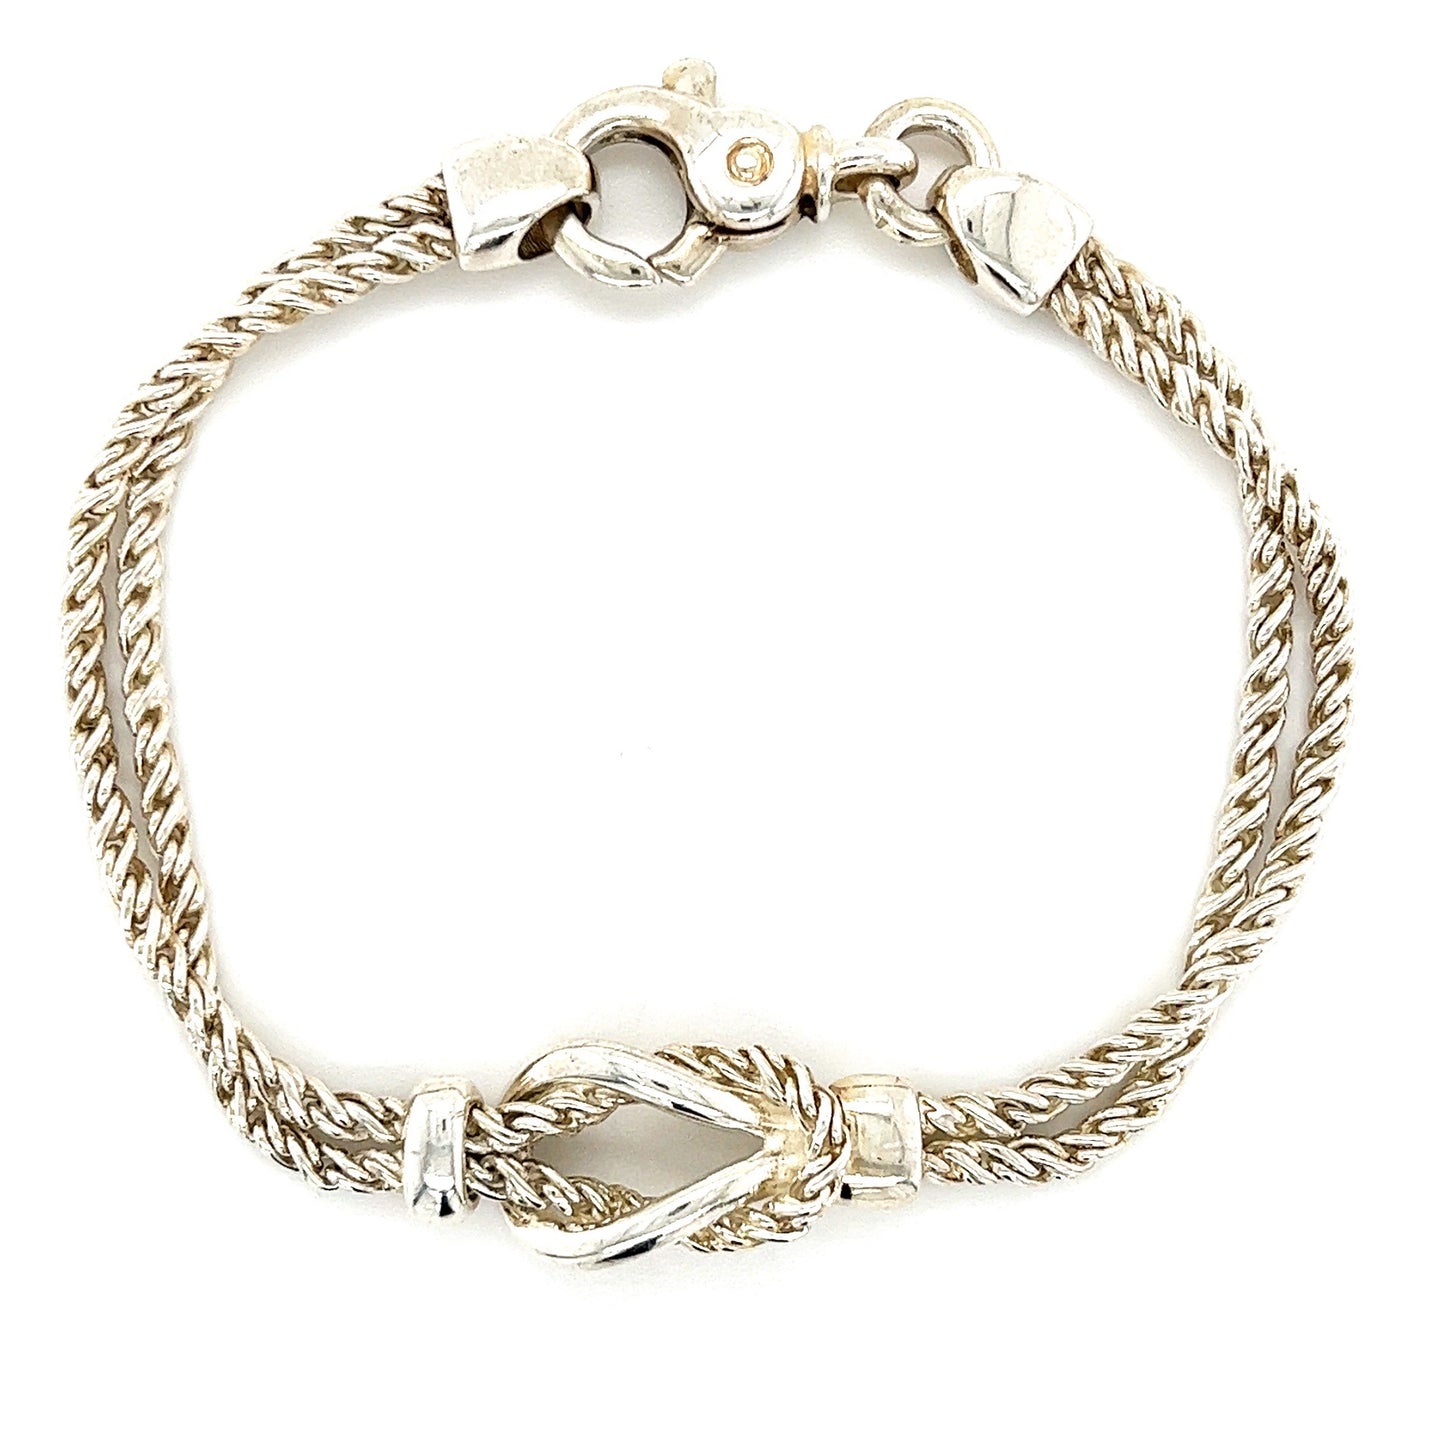 Tiffany & Co. Double Love Knot Bracelet